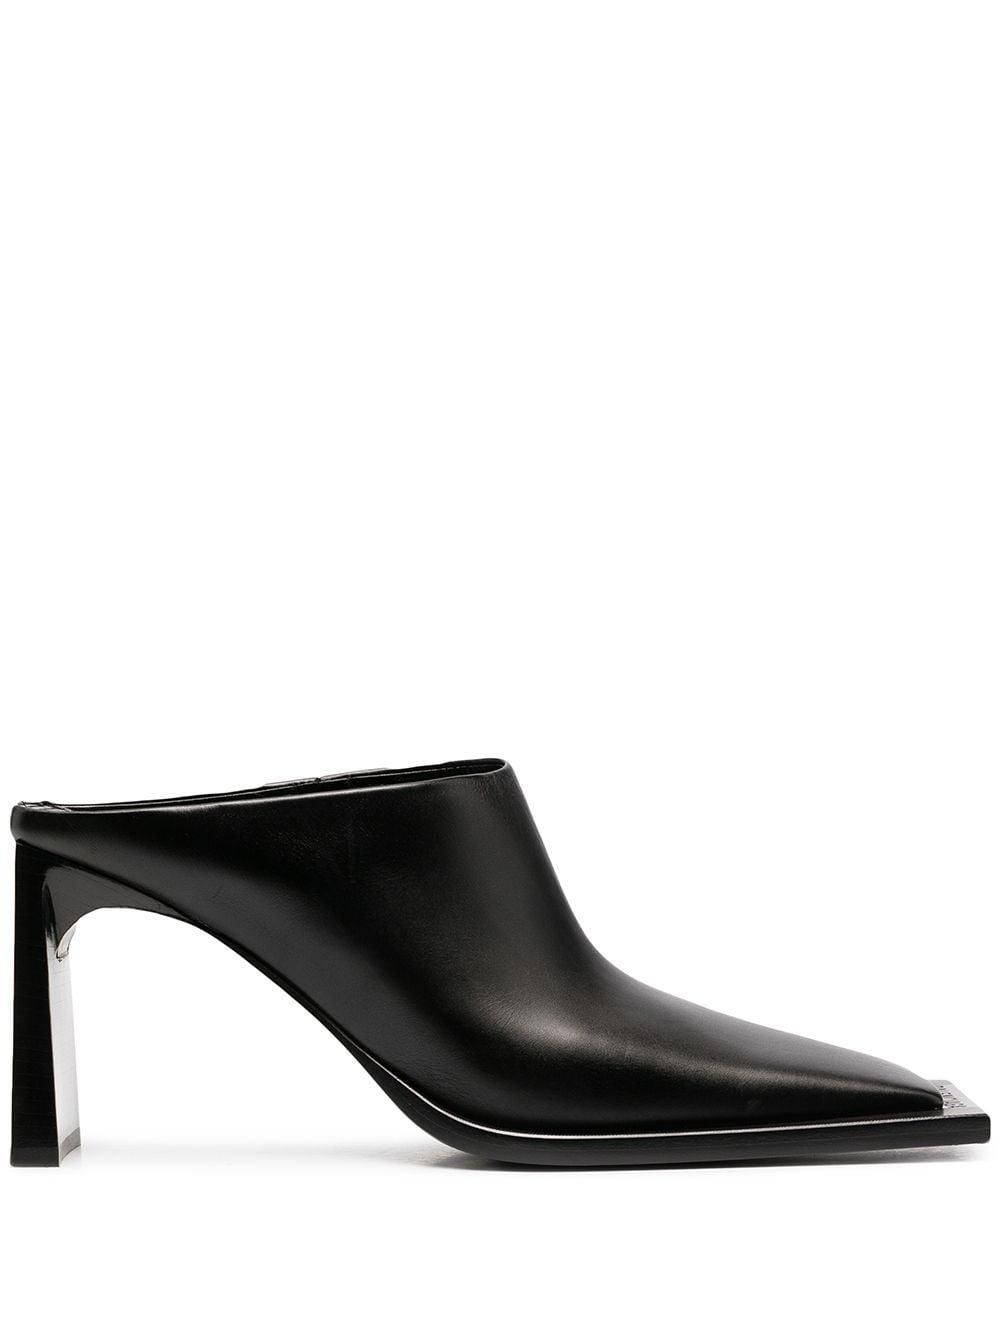 Balenciaga Leather Square-toe Mules in Black | Lyst